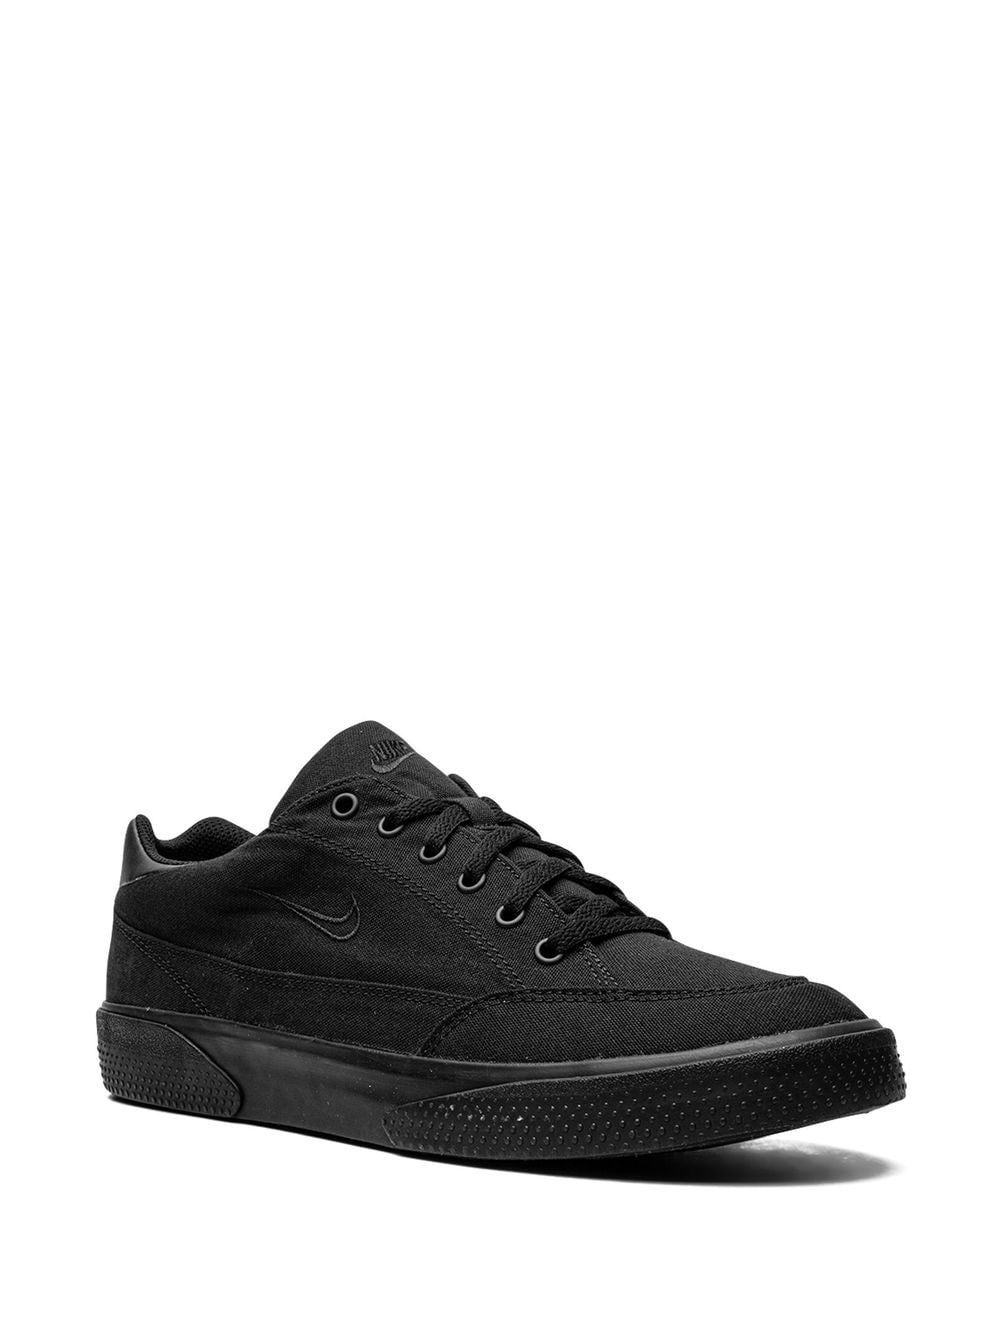 Shop Nike Gts 97 "black/black/black" Sneakers